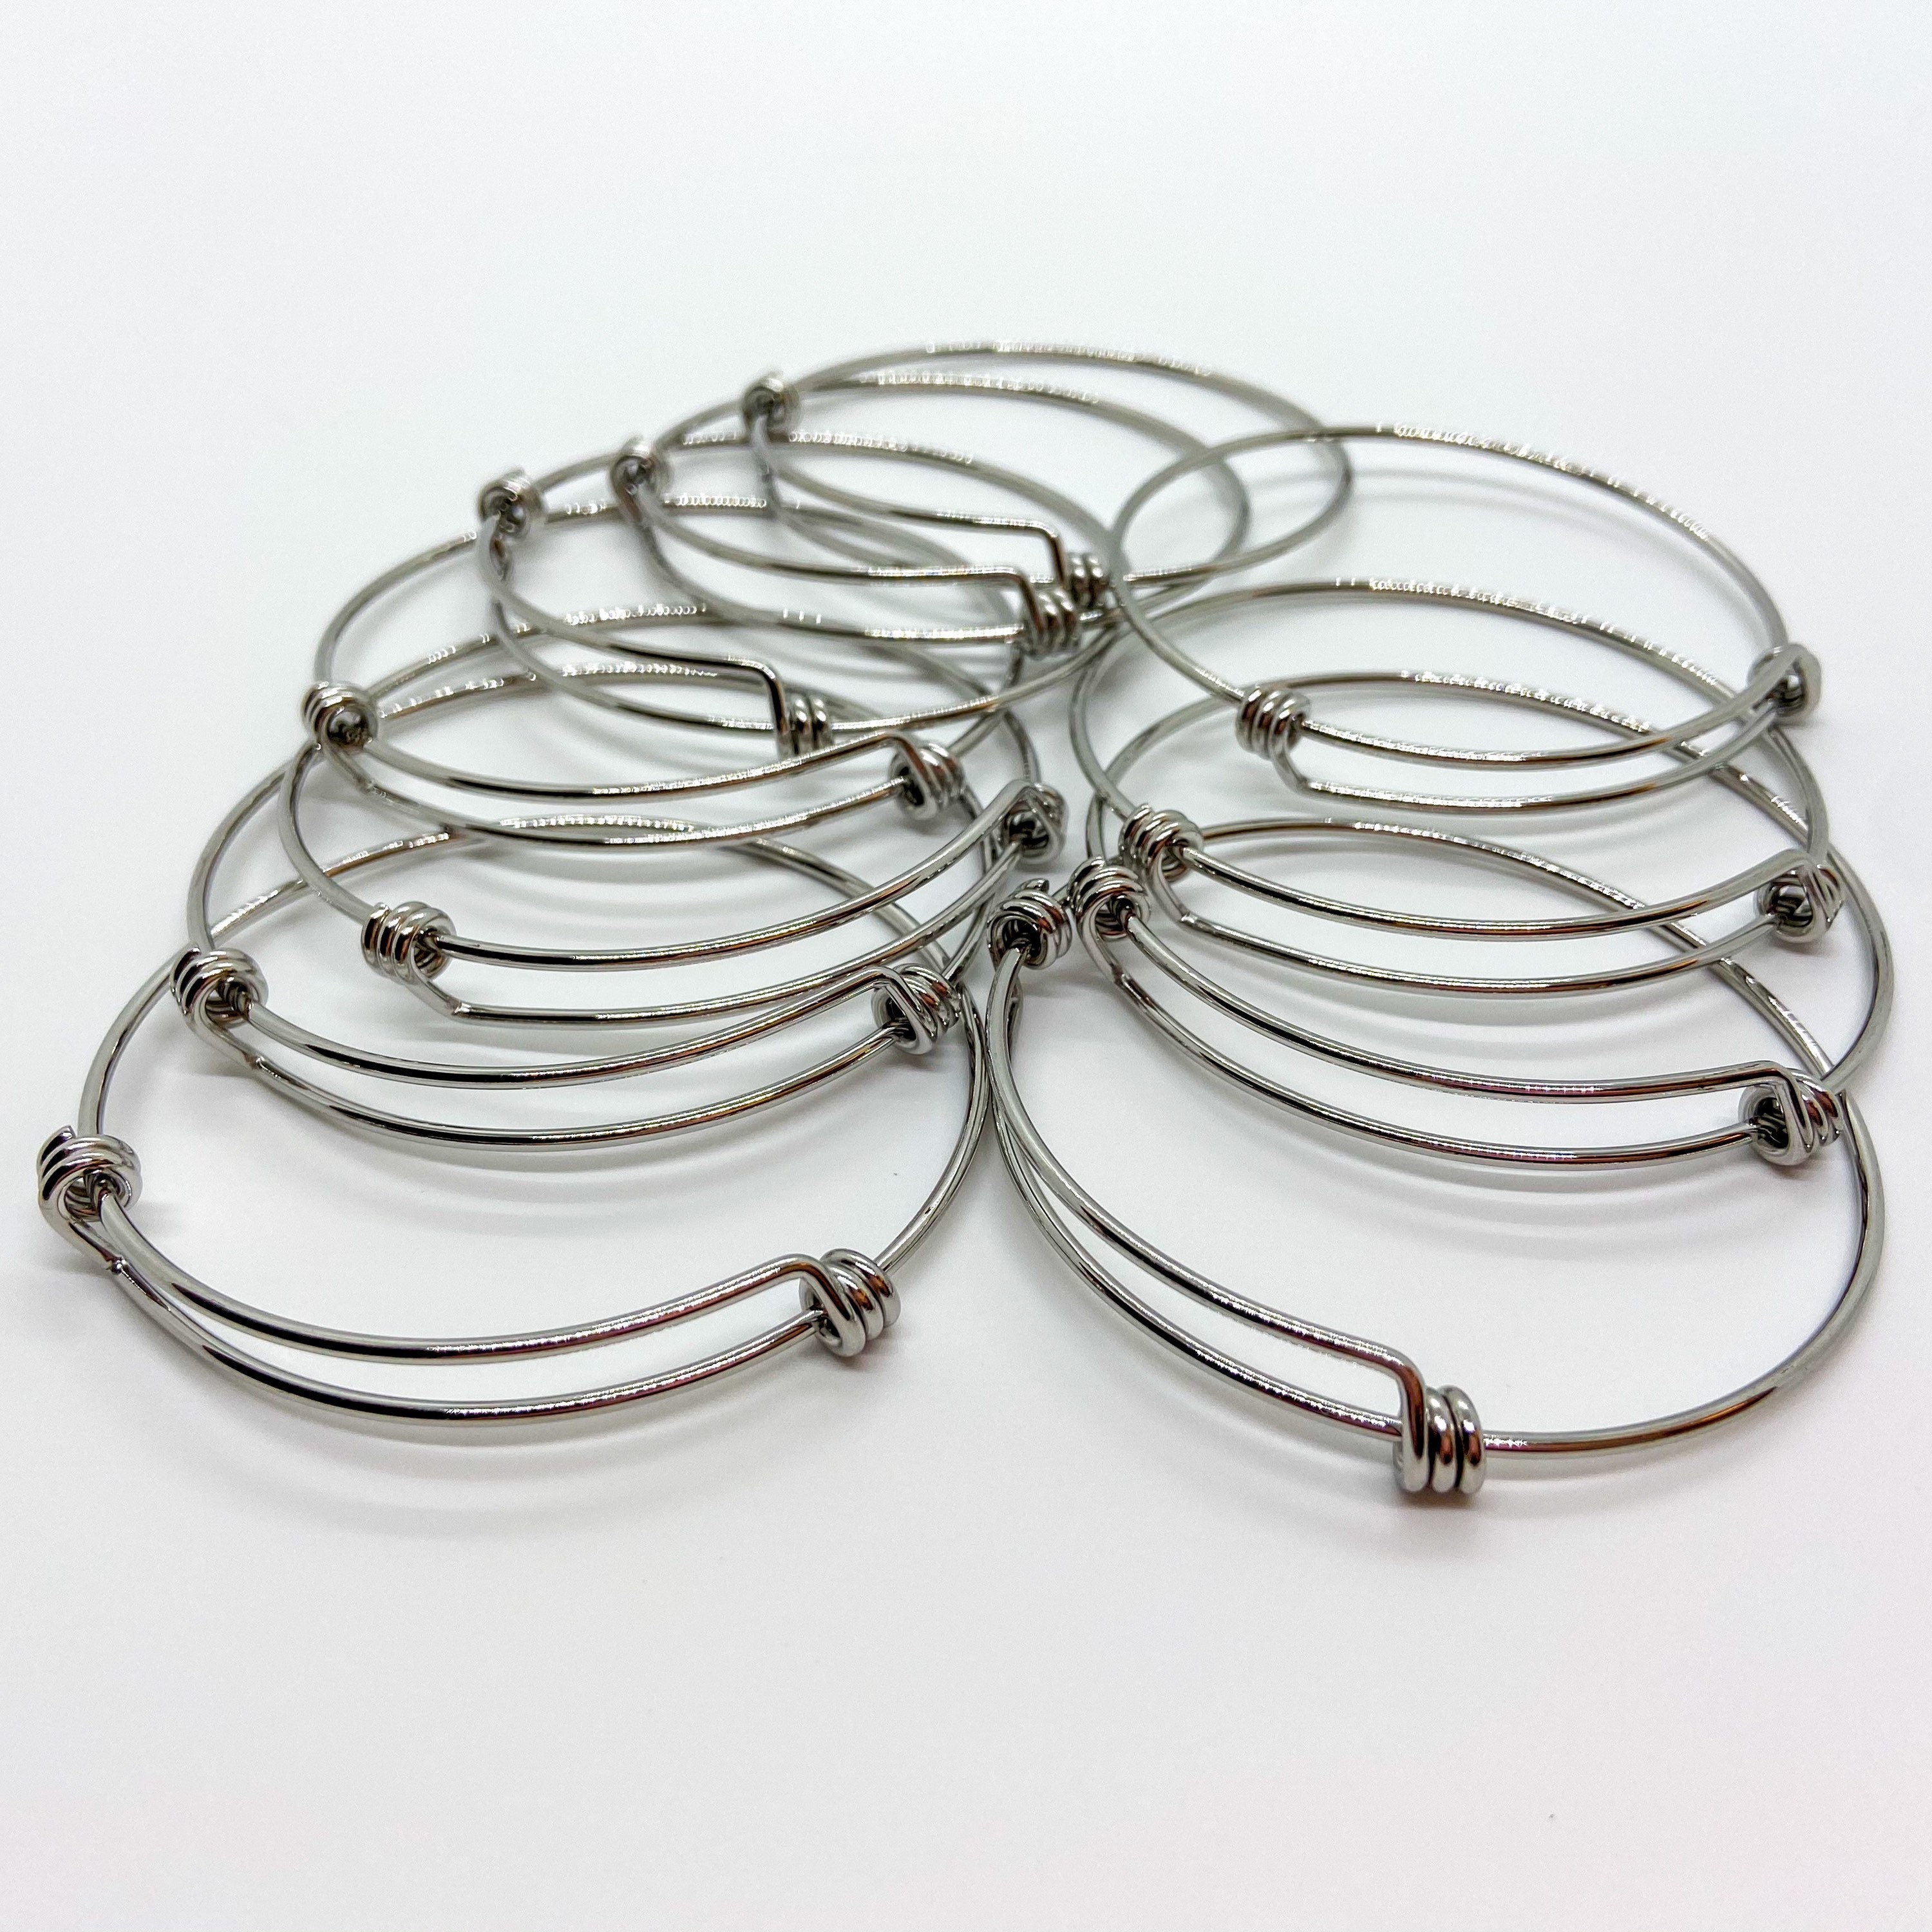 Men's Steel Art Stainless Steel With Black Leather Thread Bangle Bracelet  (8